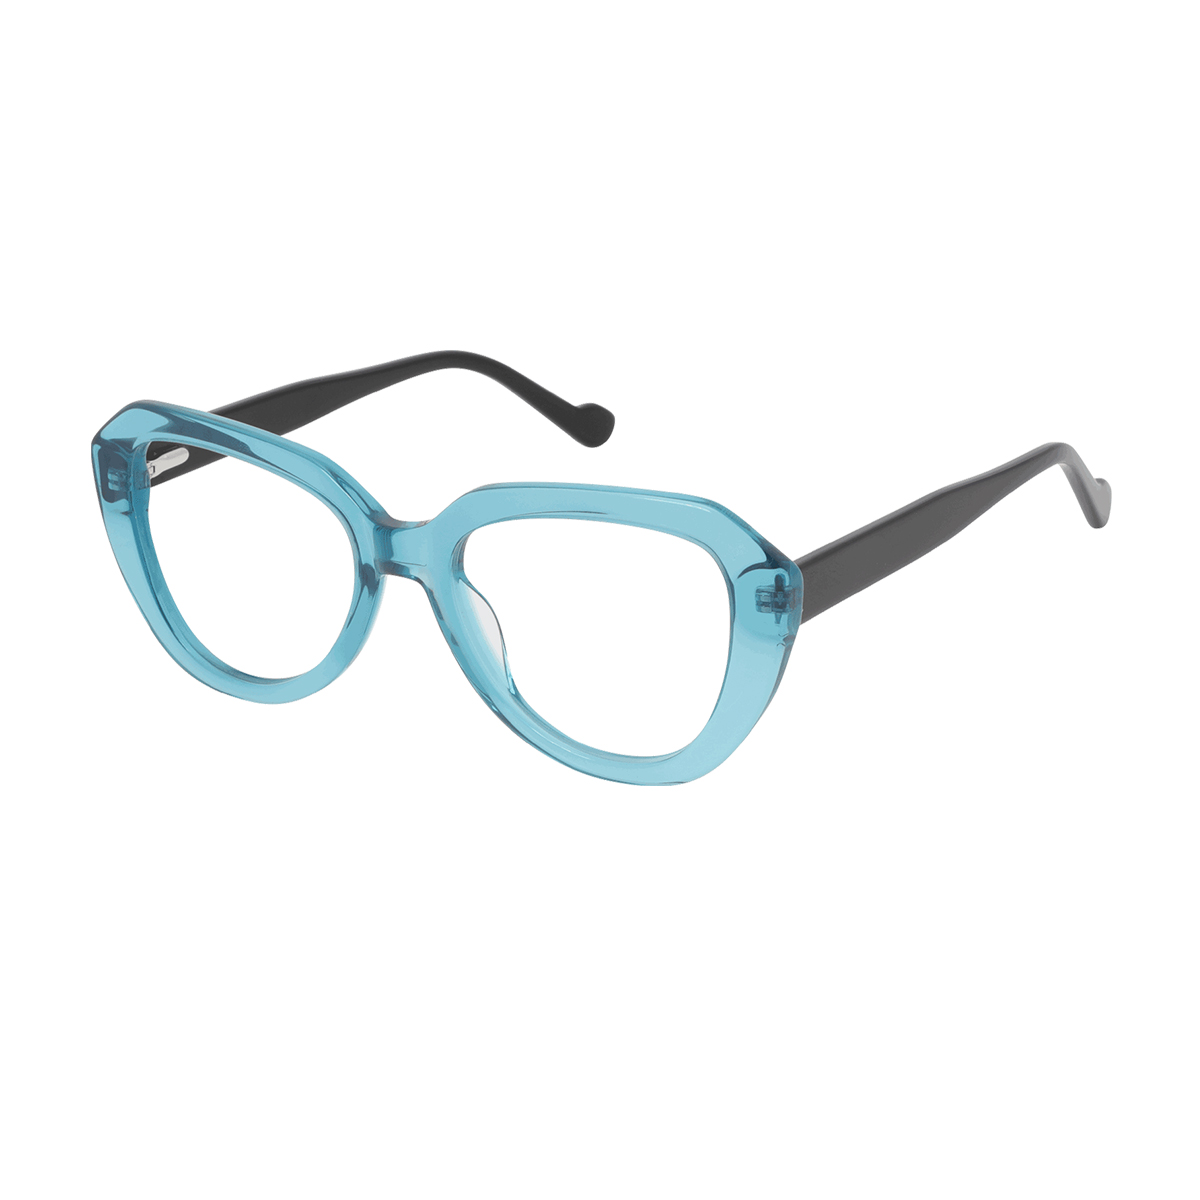 Alexis - Cat-eye Transparent blue/black Reading Glasses for Women